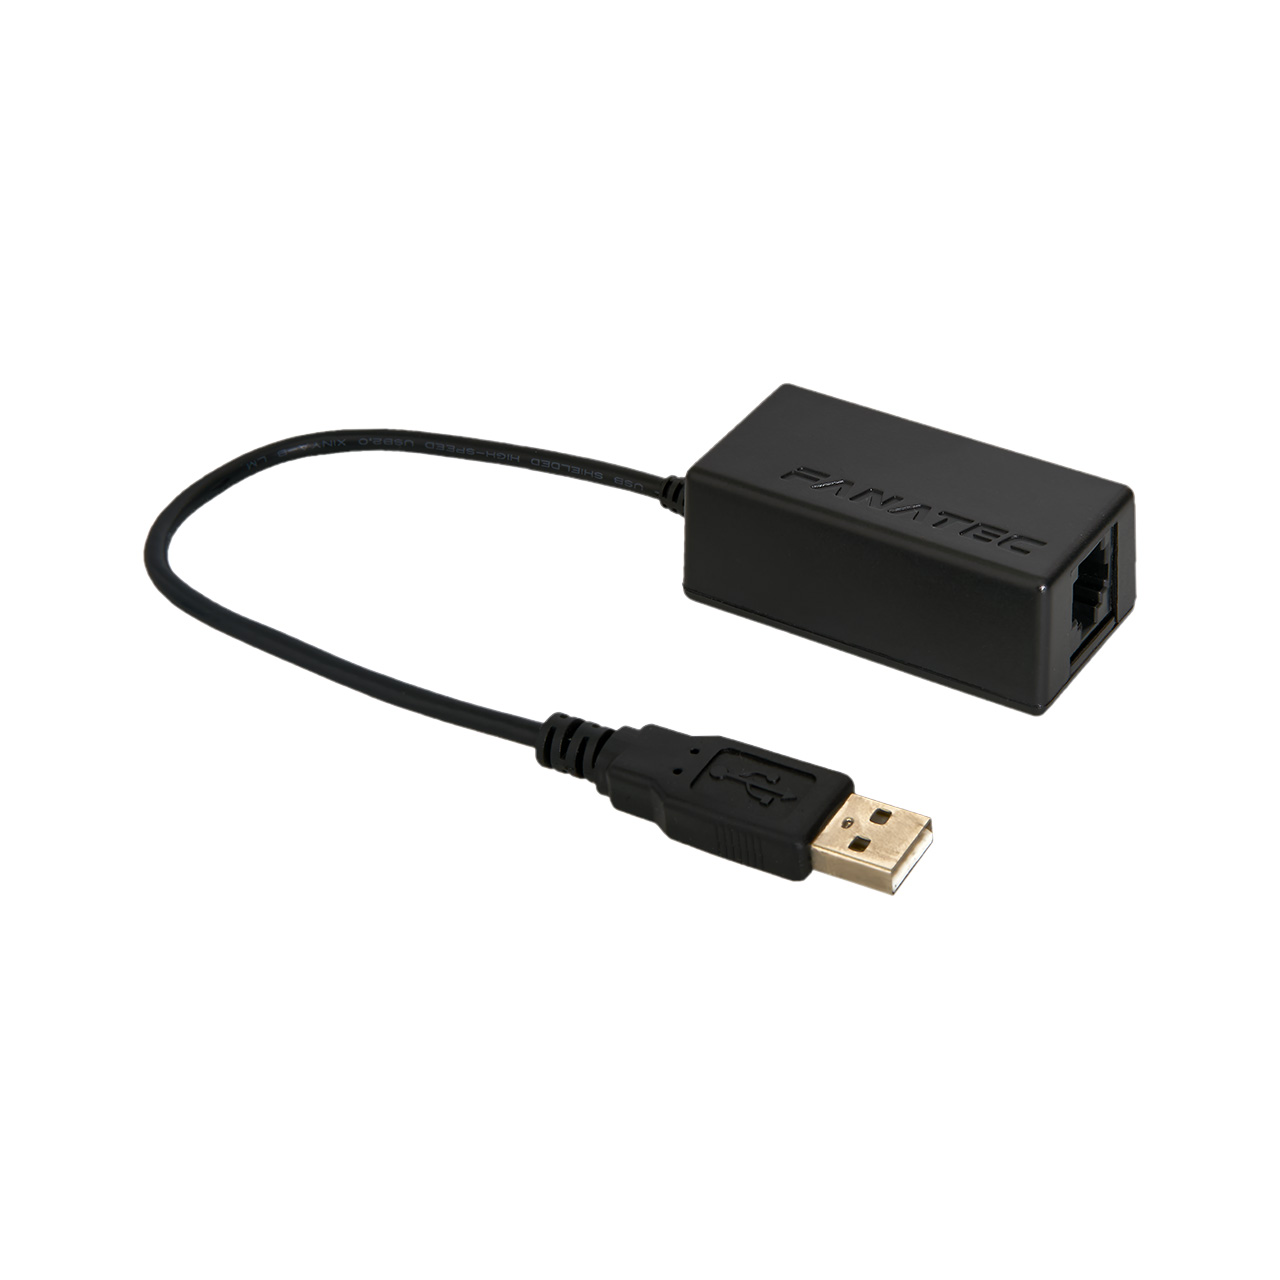 Fanatec Clubsport USB adapter